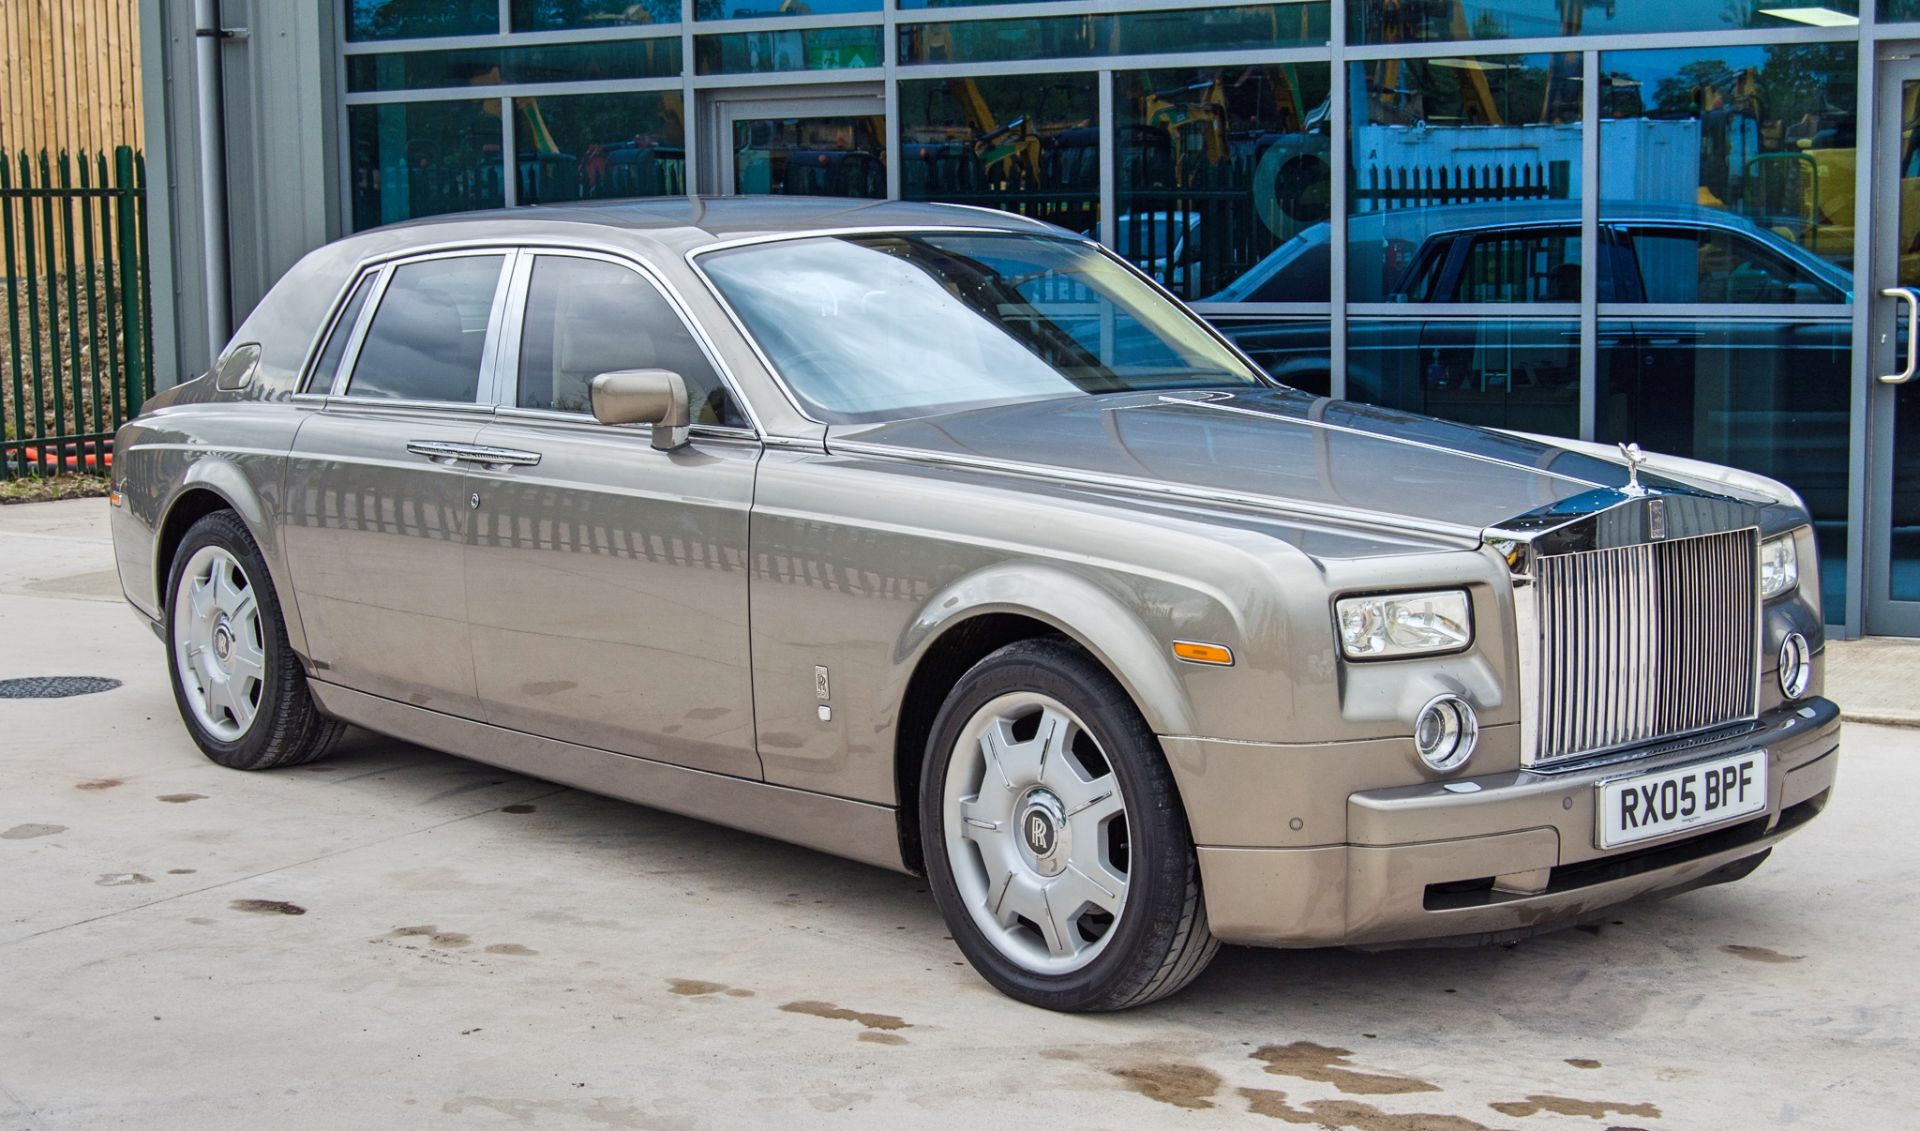 2005 Rolls Royce Phantom 6749cc V12 Auto 4 door saloon car - Image 2 of 53